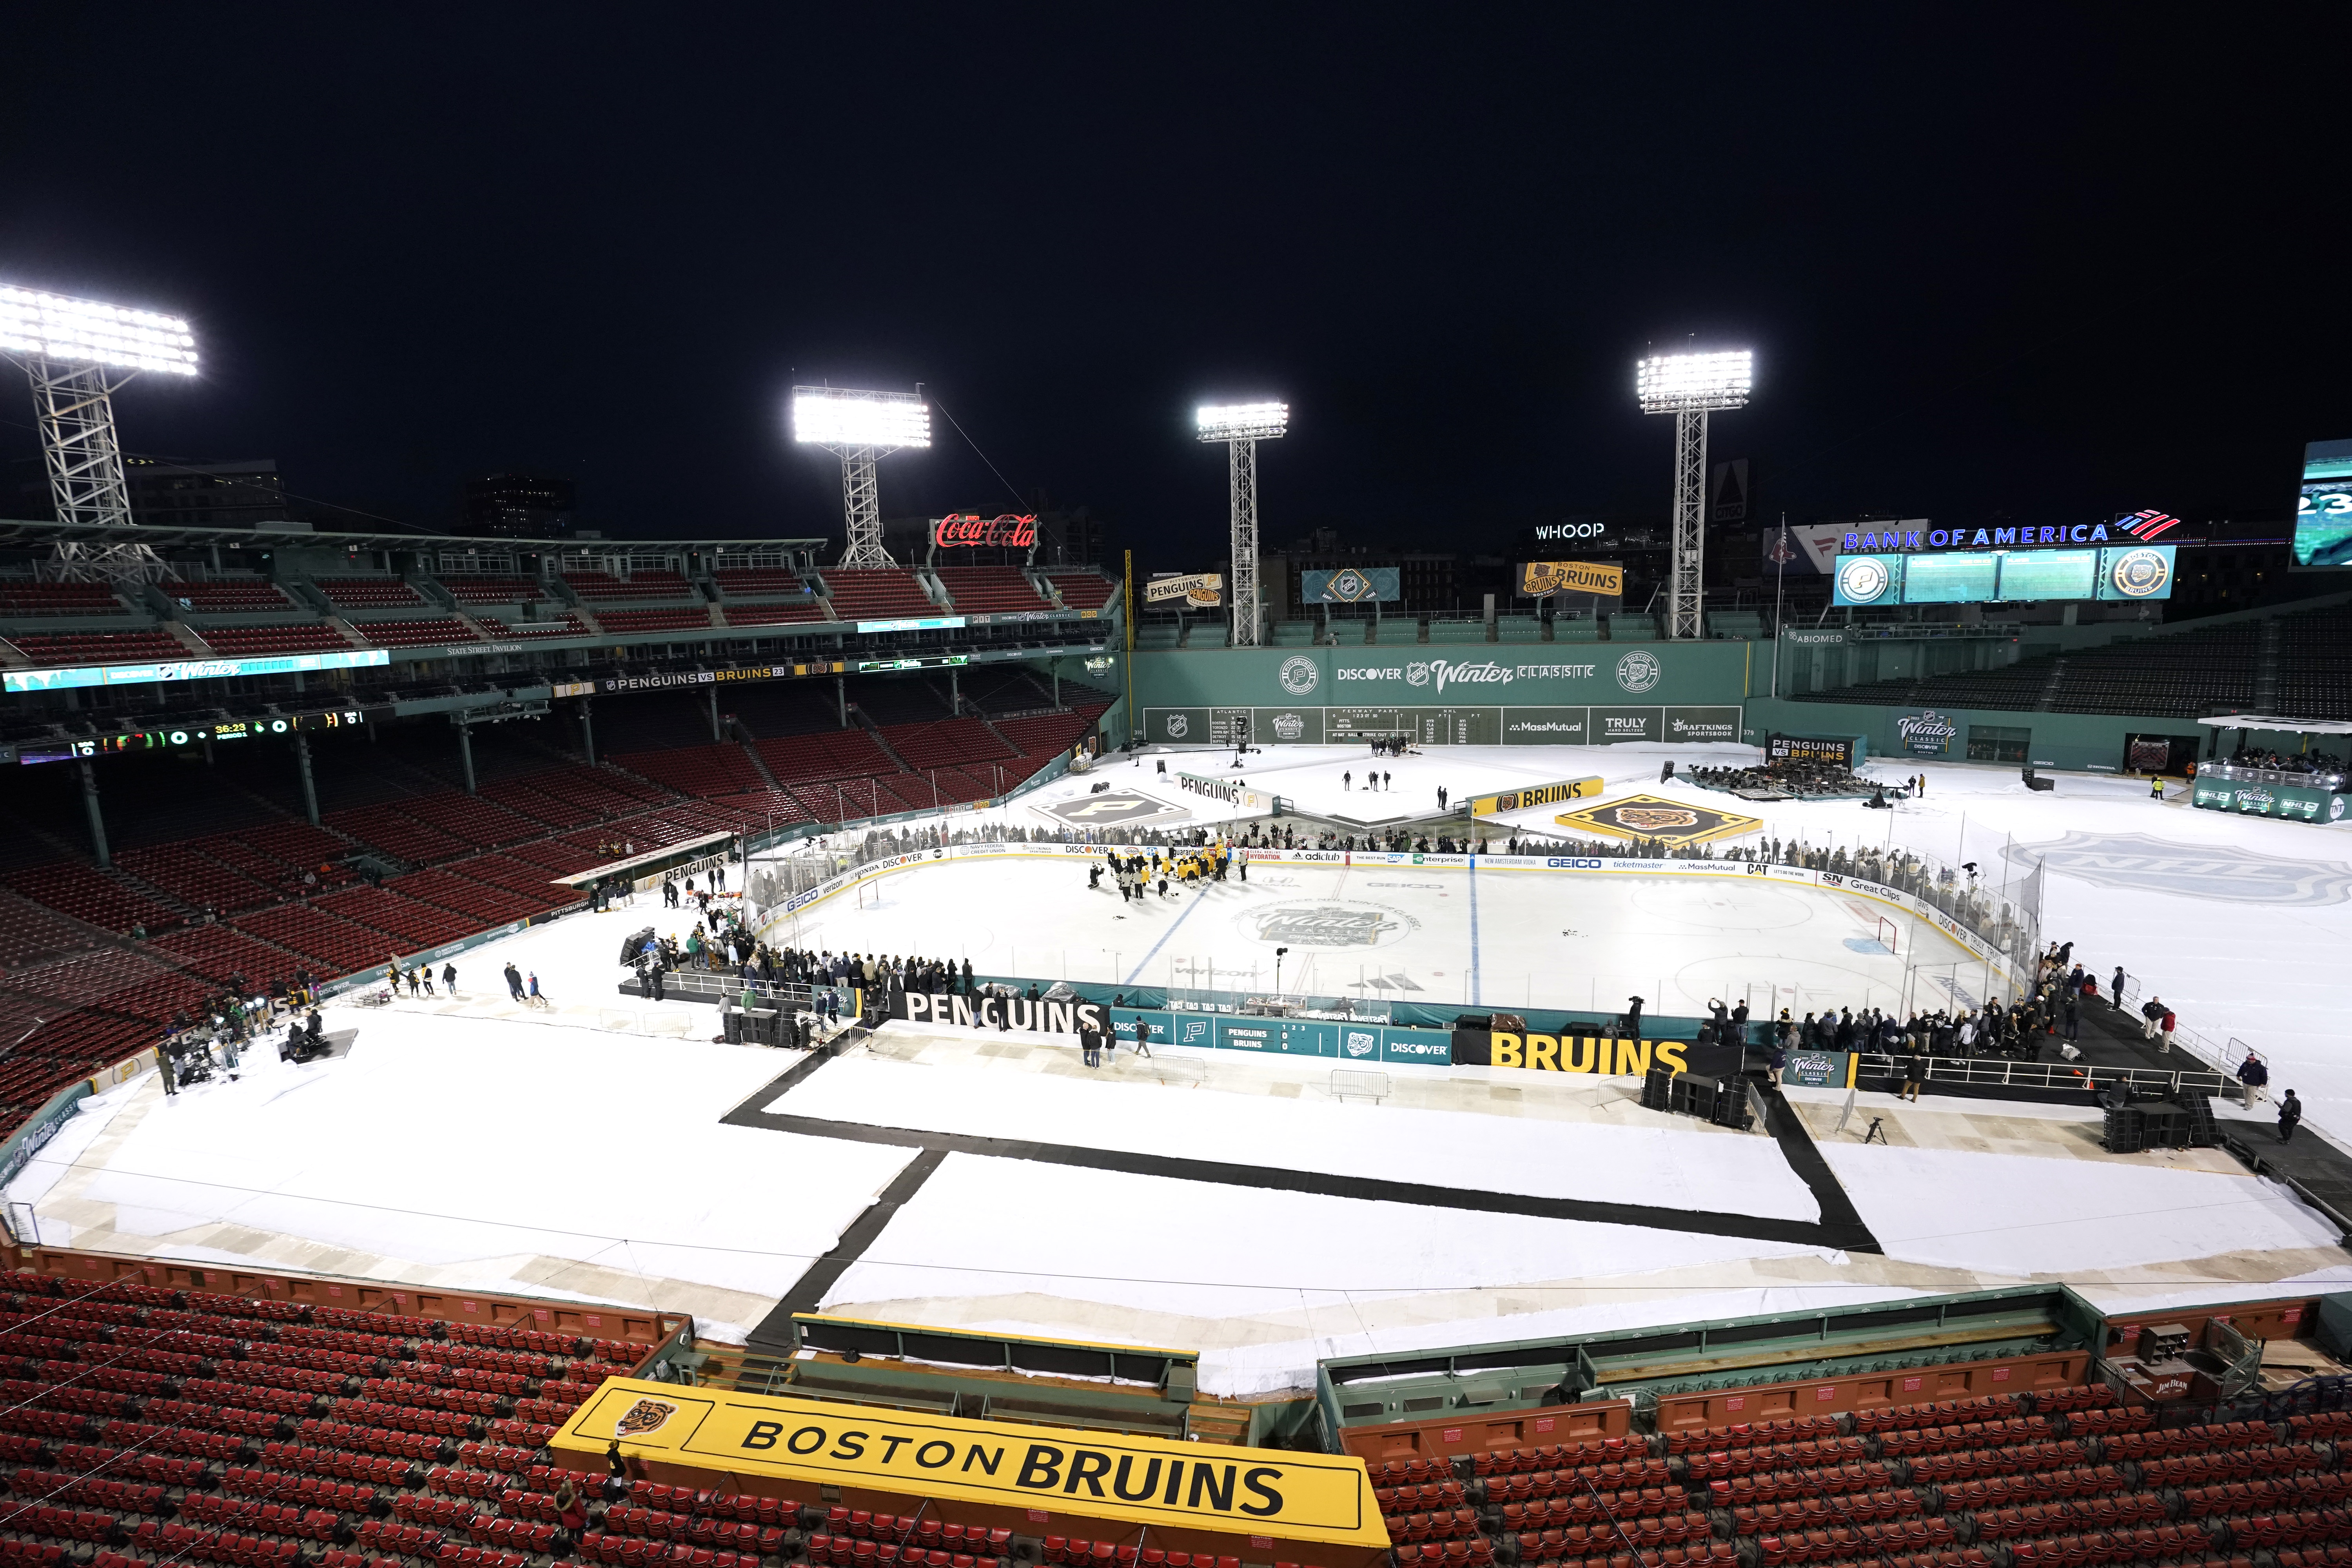 Winter Classic 2023: Bruins, Penguins wear throwback MLB uniforms